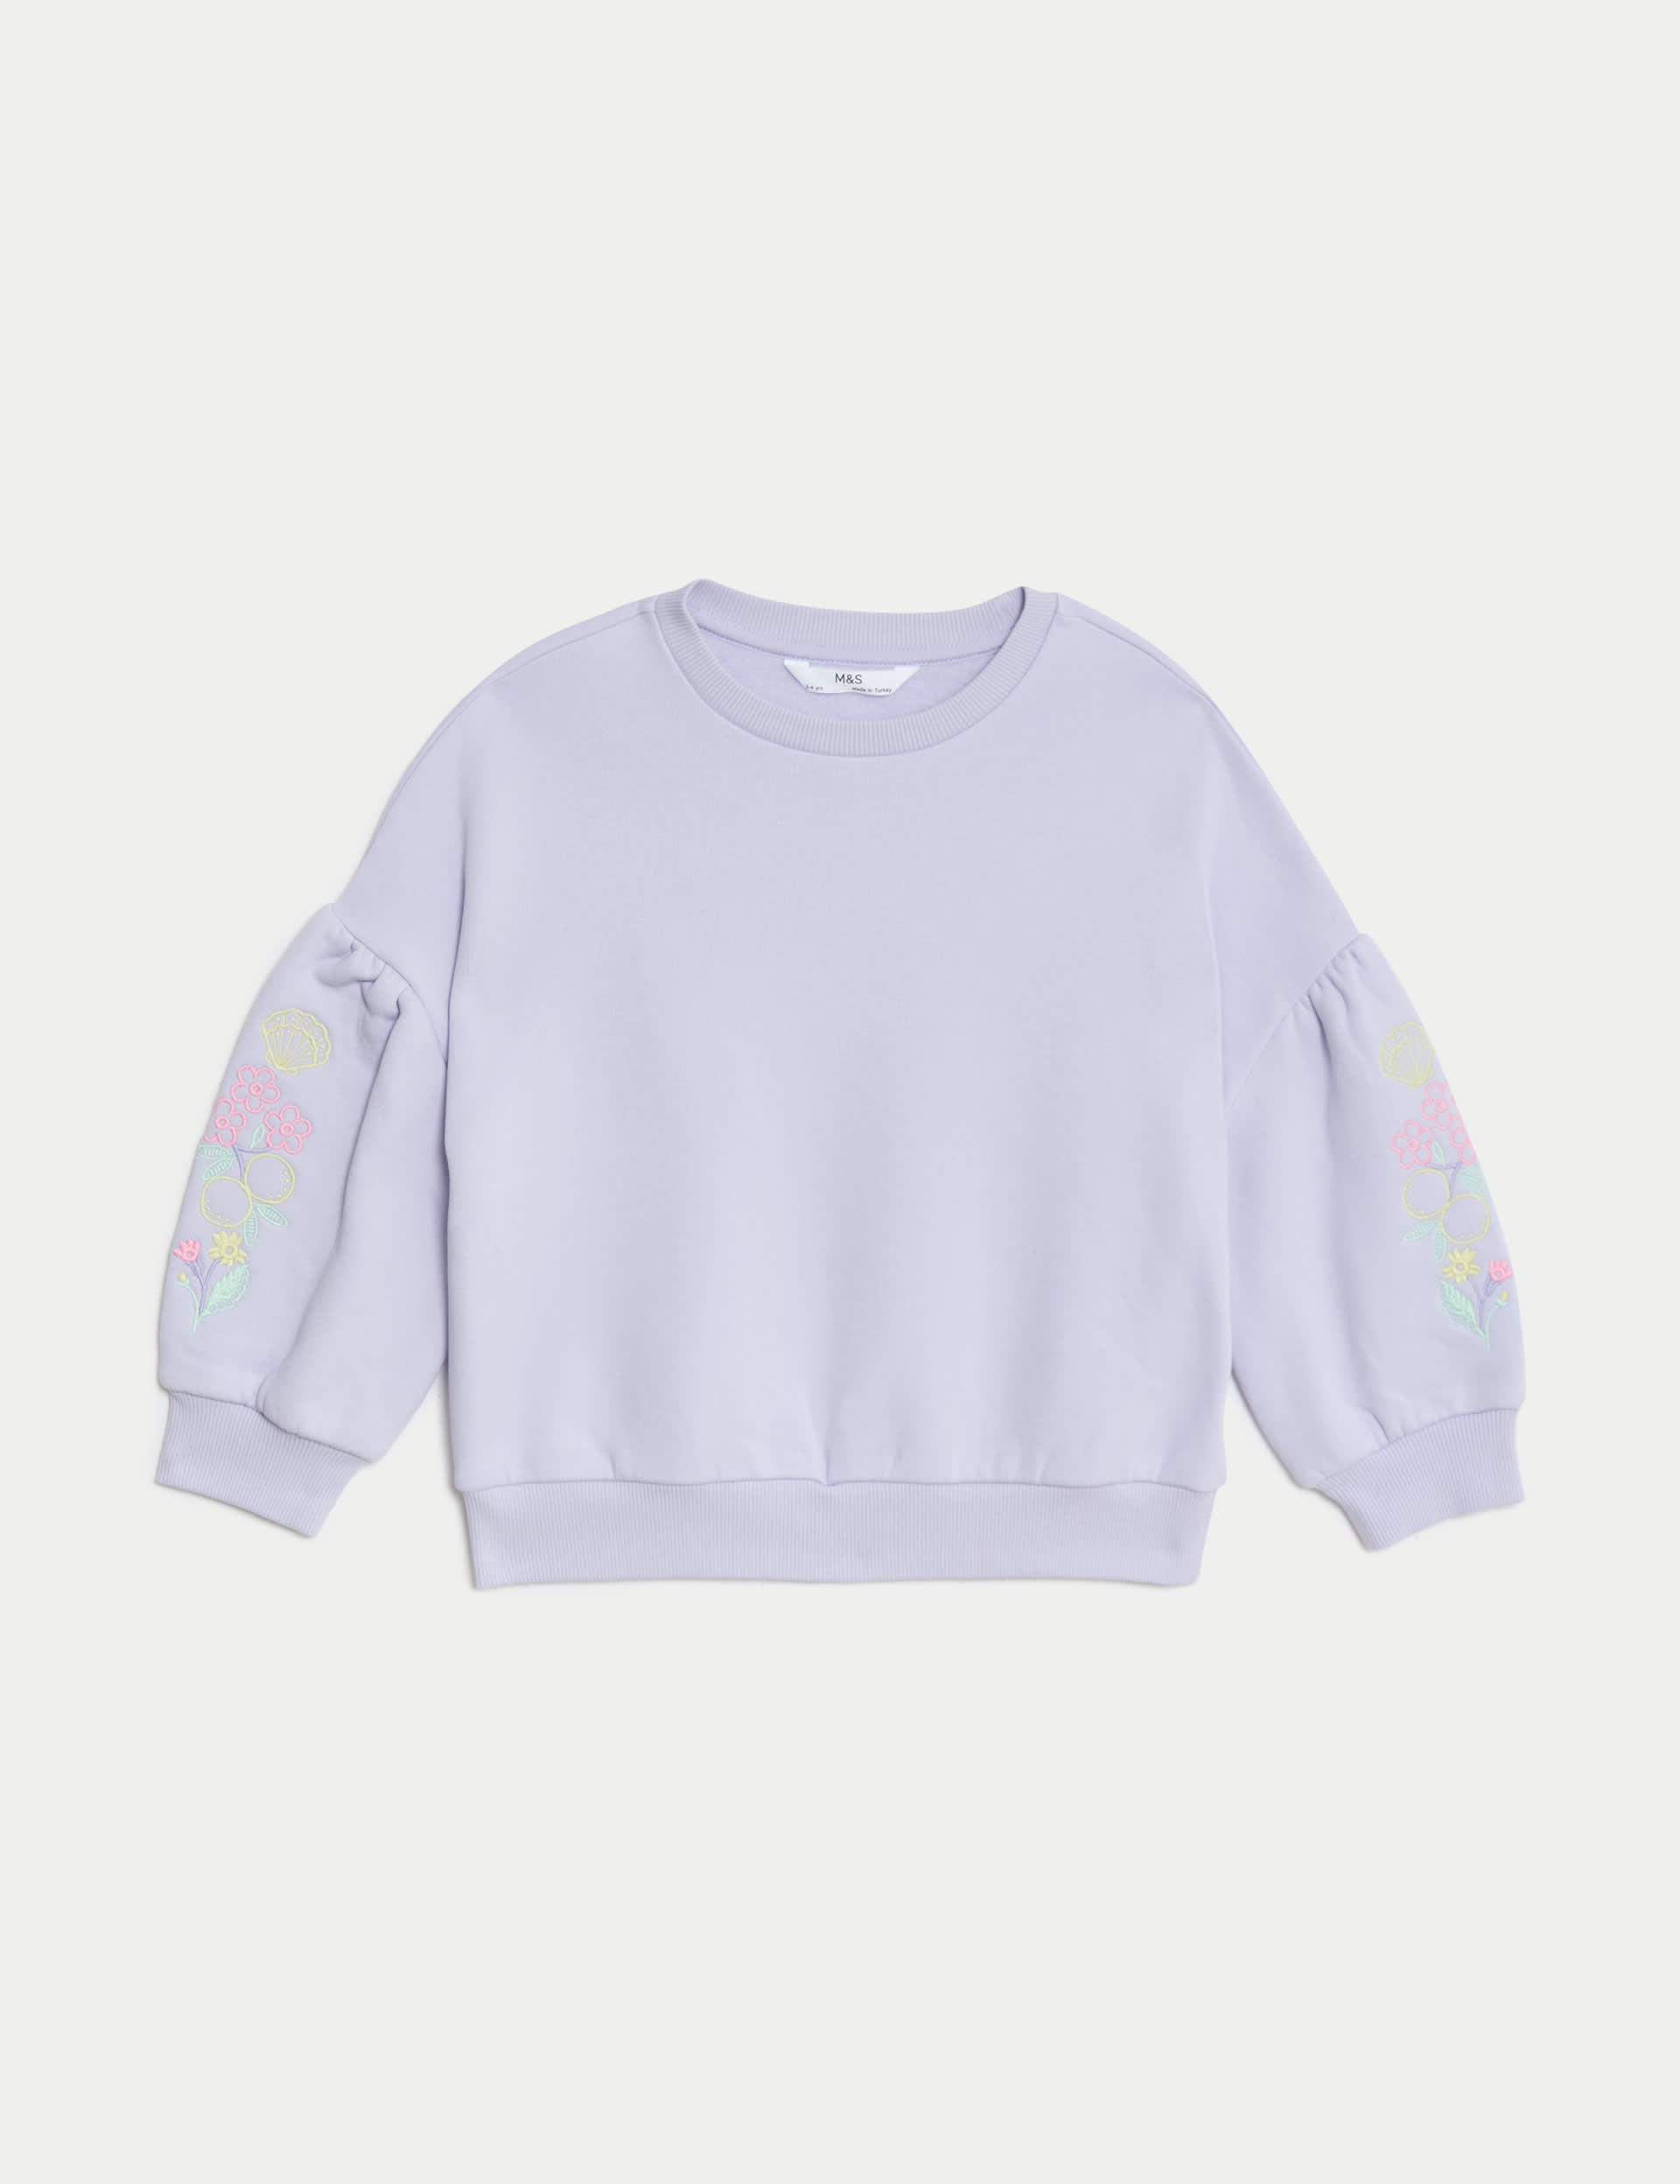 Cotton Rich Floral Sweatshirt (2-8 Yrs)